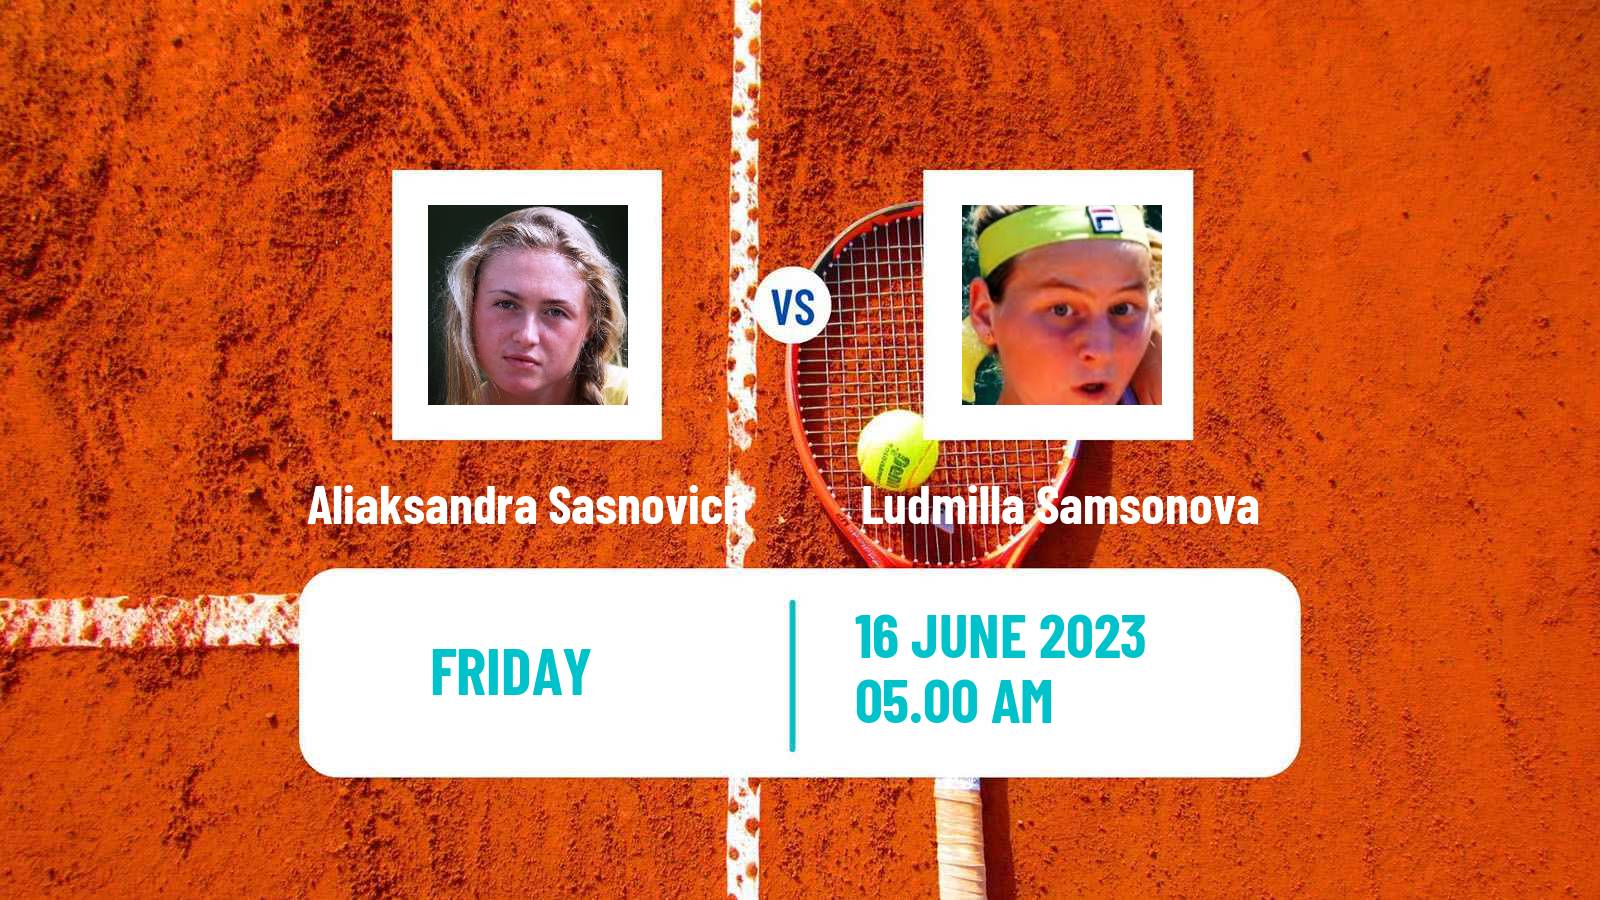 Tennis WTA Hertogenbosch Aliaksandra Sasnovich - Ludmilla Samsonova